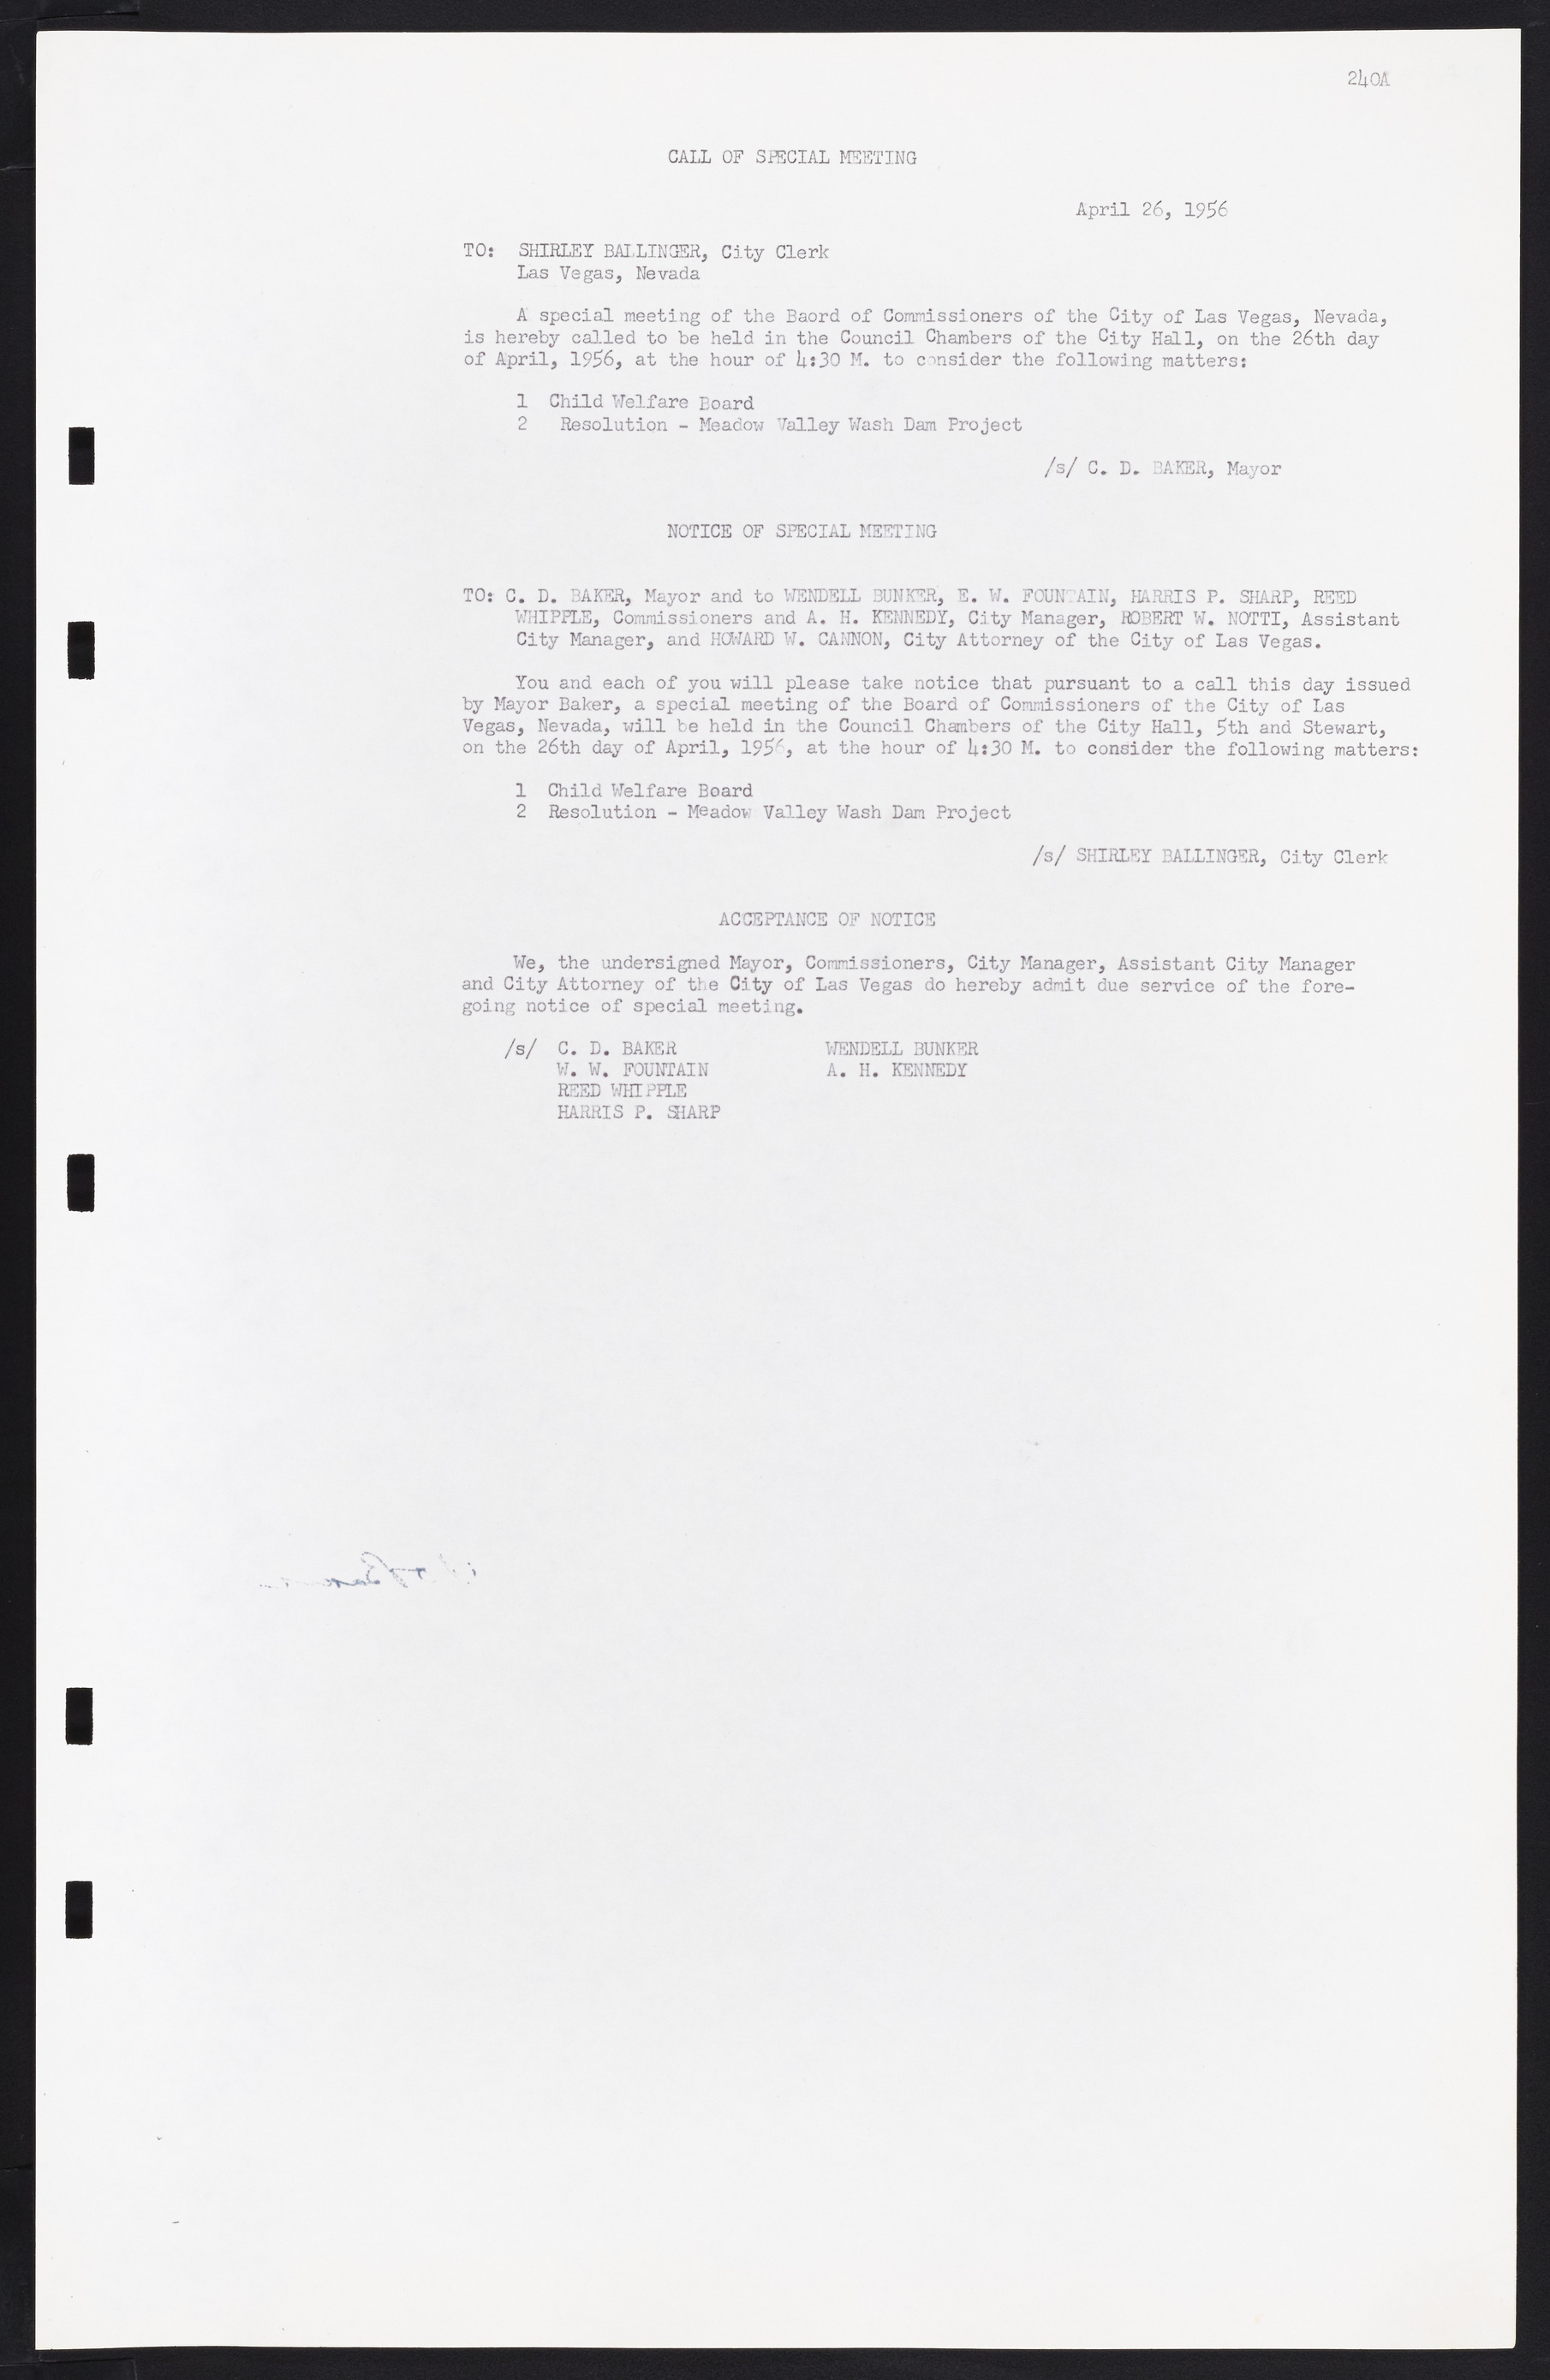 Las Vegas City Commission Minutes, September 21, 1955 to November 20, 1957, lvc000010-259